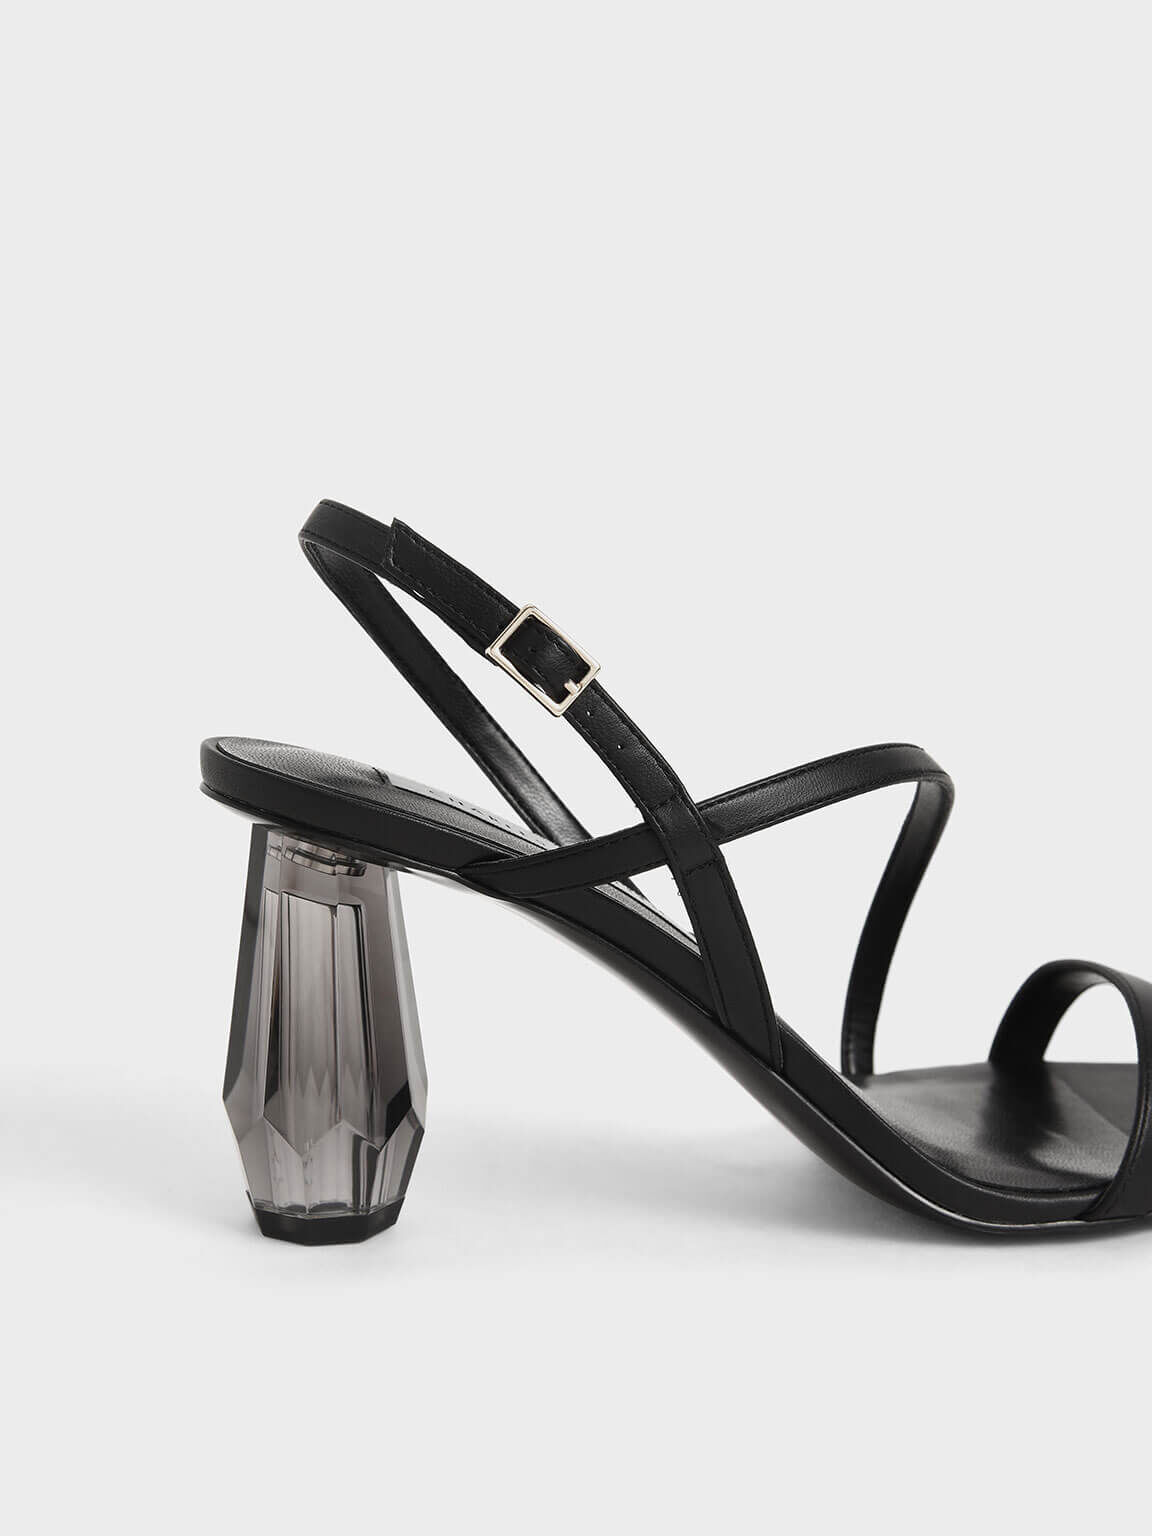 See-Through Sculptural Heel Sandals, Black, hi-res